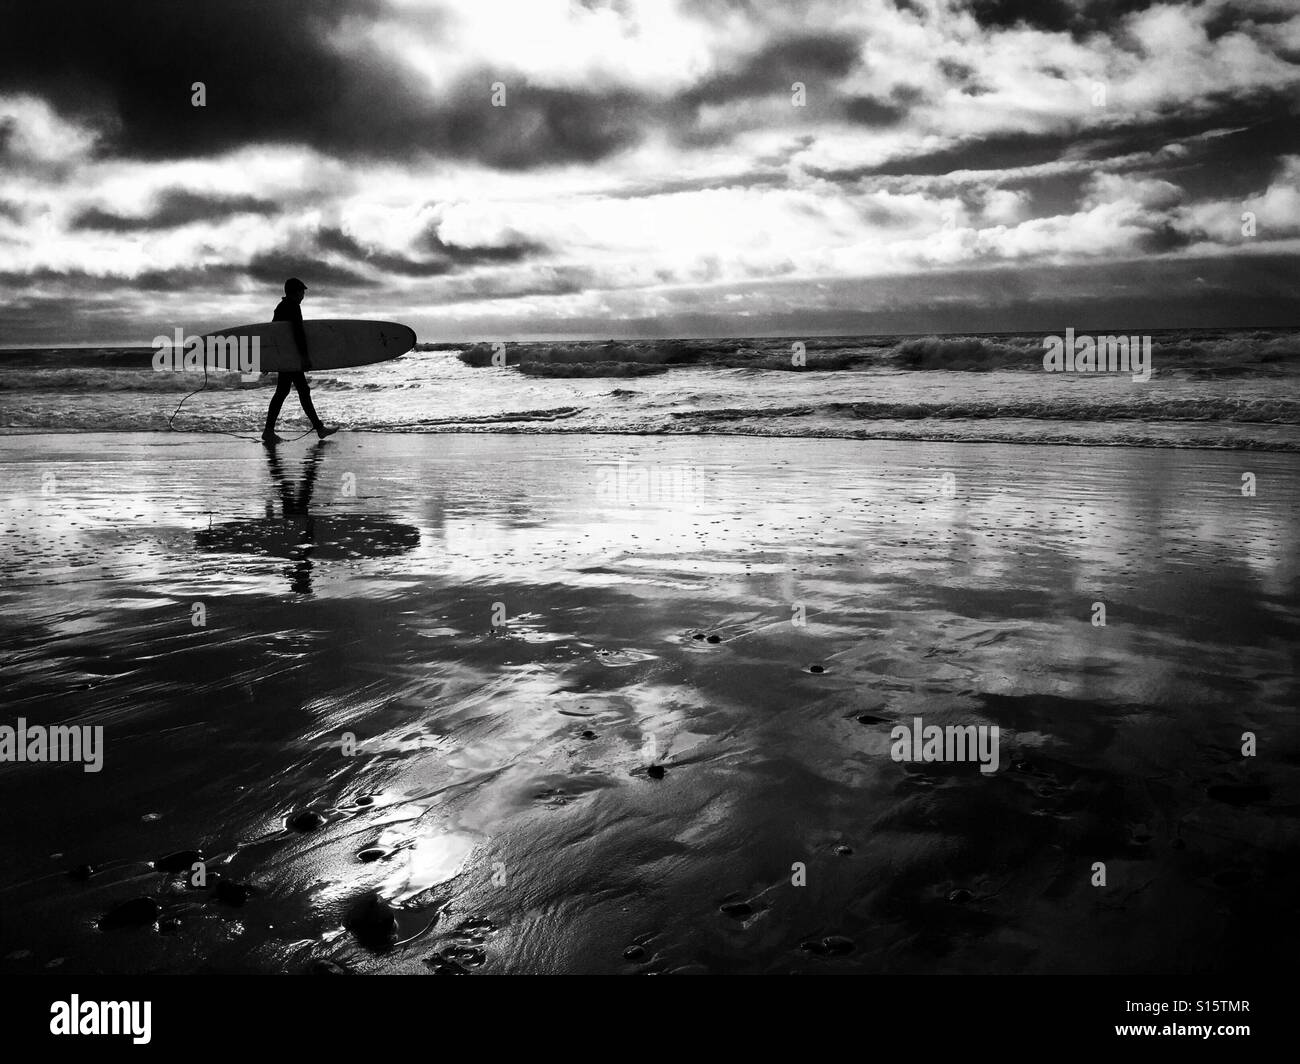 Eine Surfer trägt seinem Brett, als er entlang Süßwasser Weststrand in Süd-Wales Oktober 2016 Spaziergänge Stockfoto